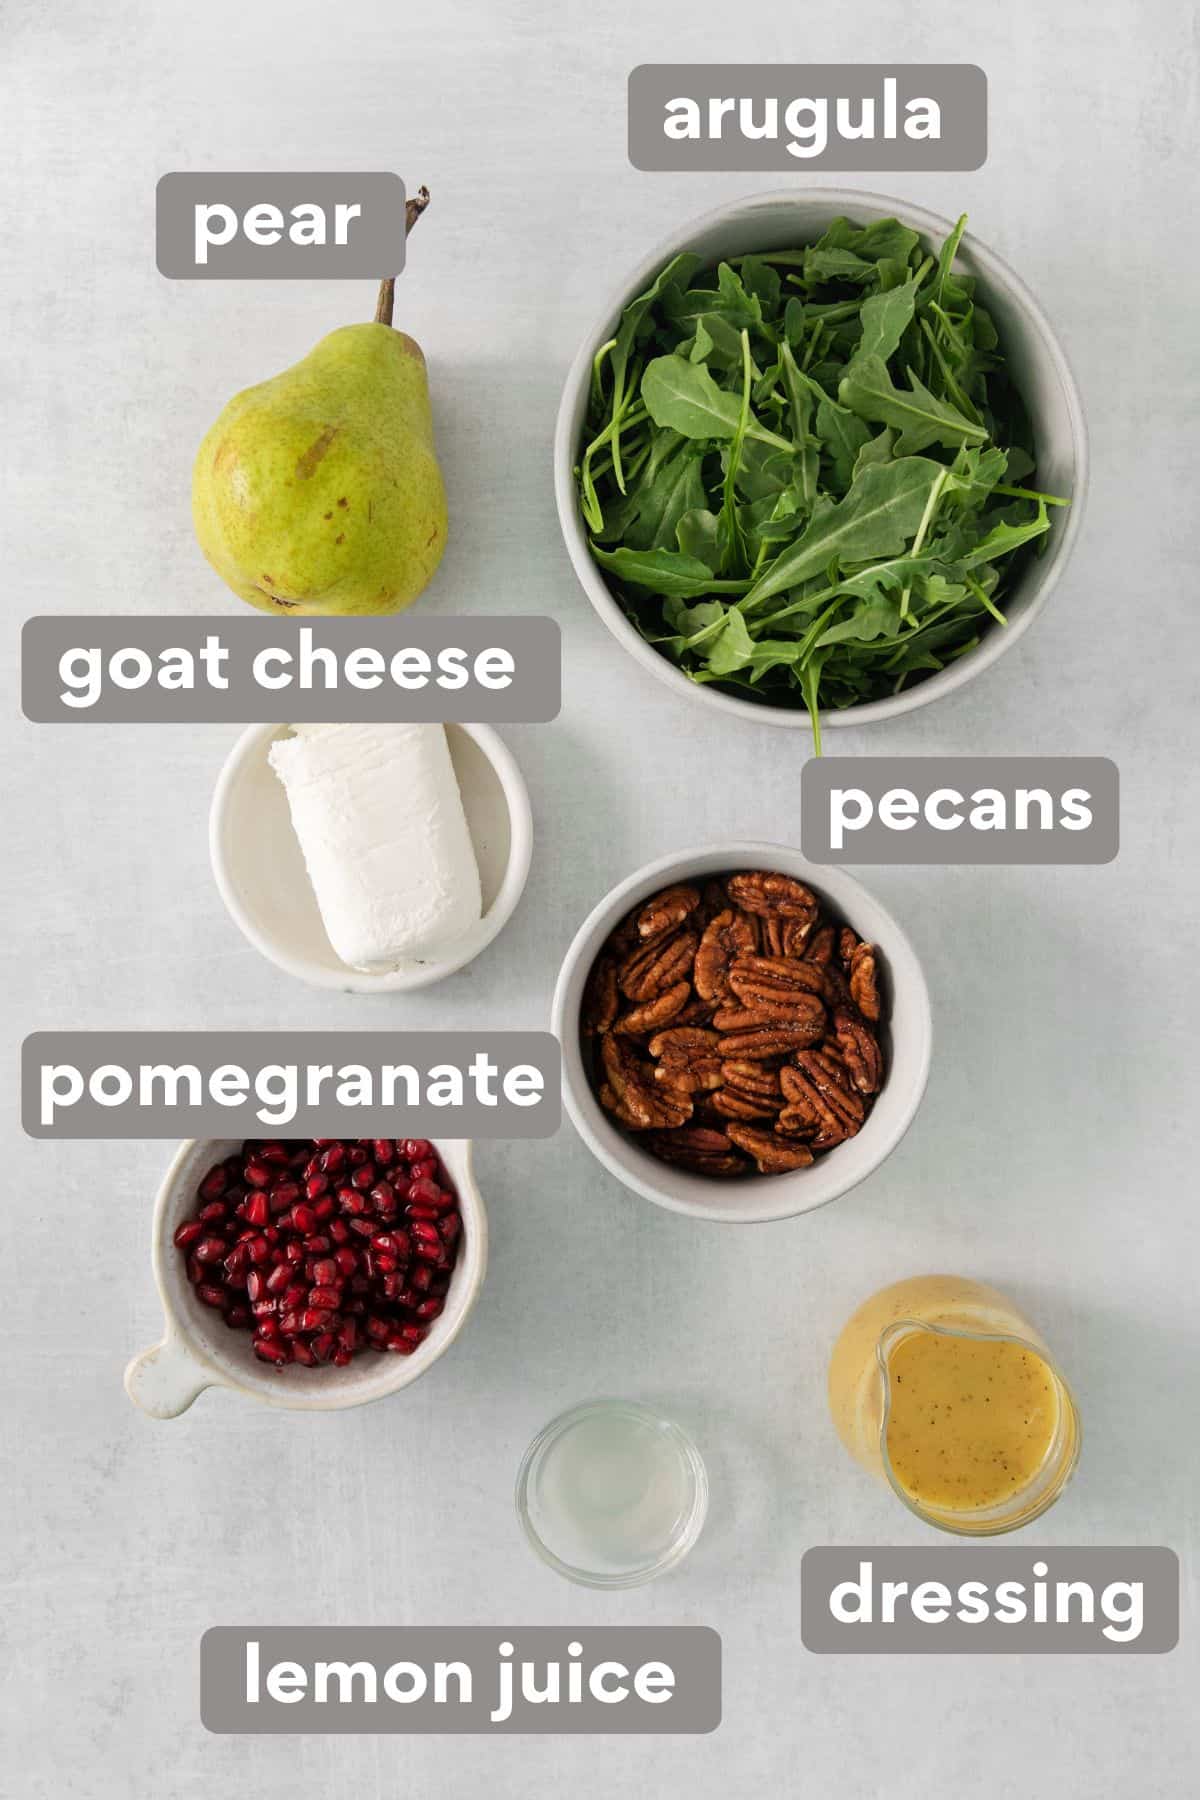 arugula pear salad ingredients on a countertop